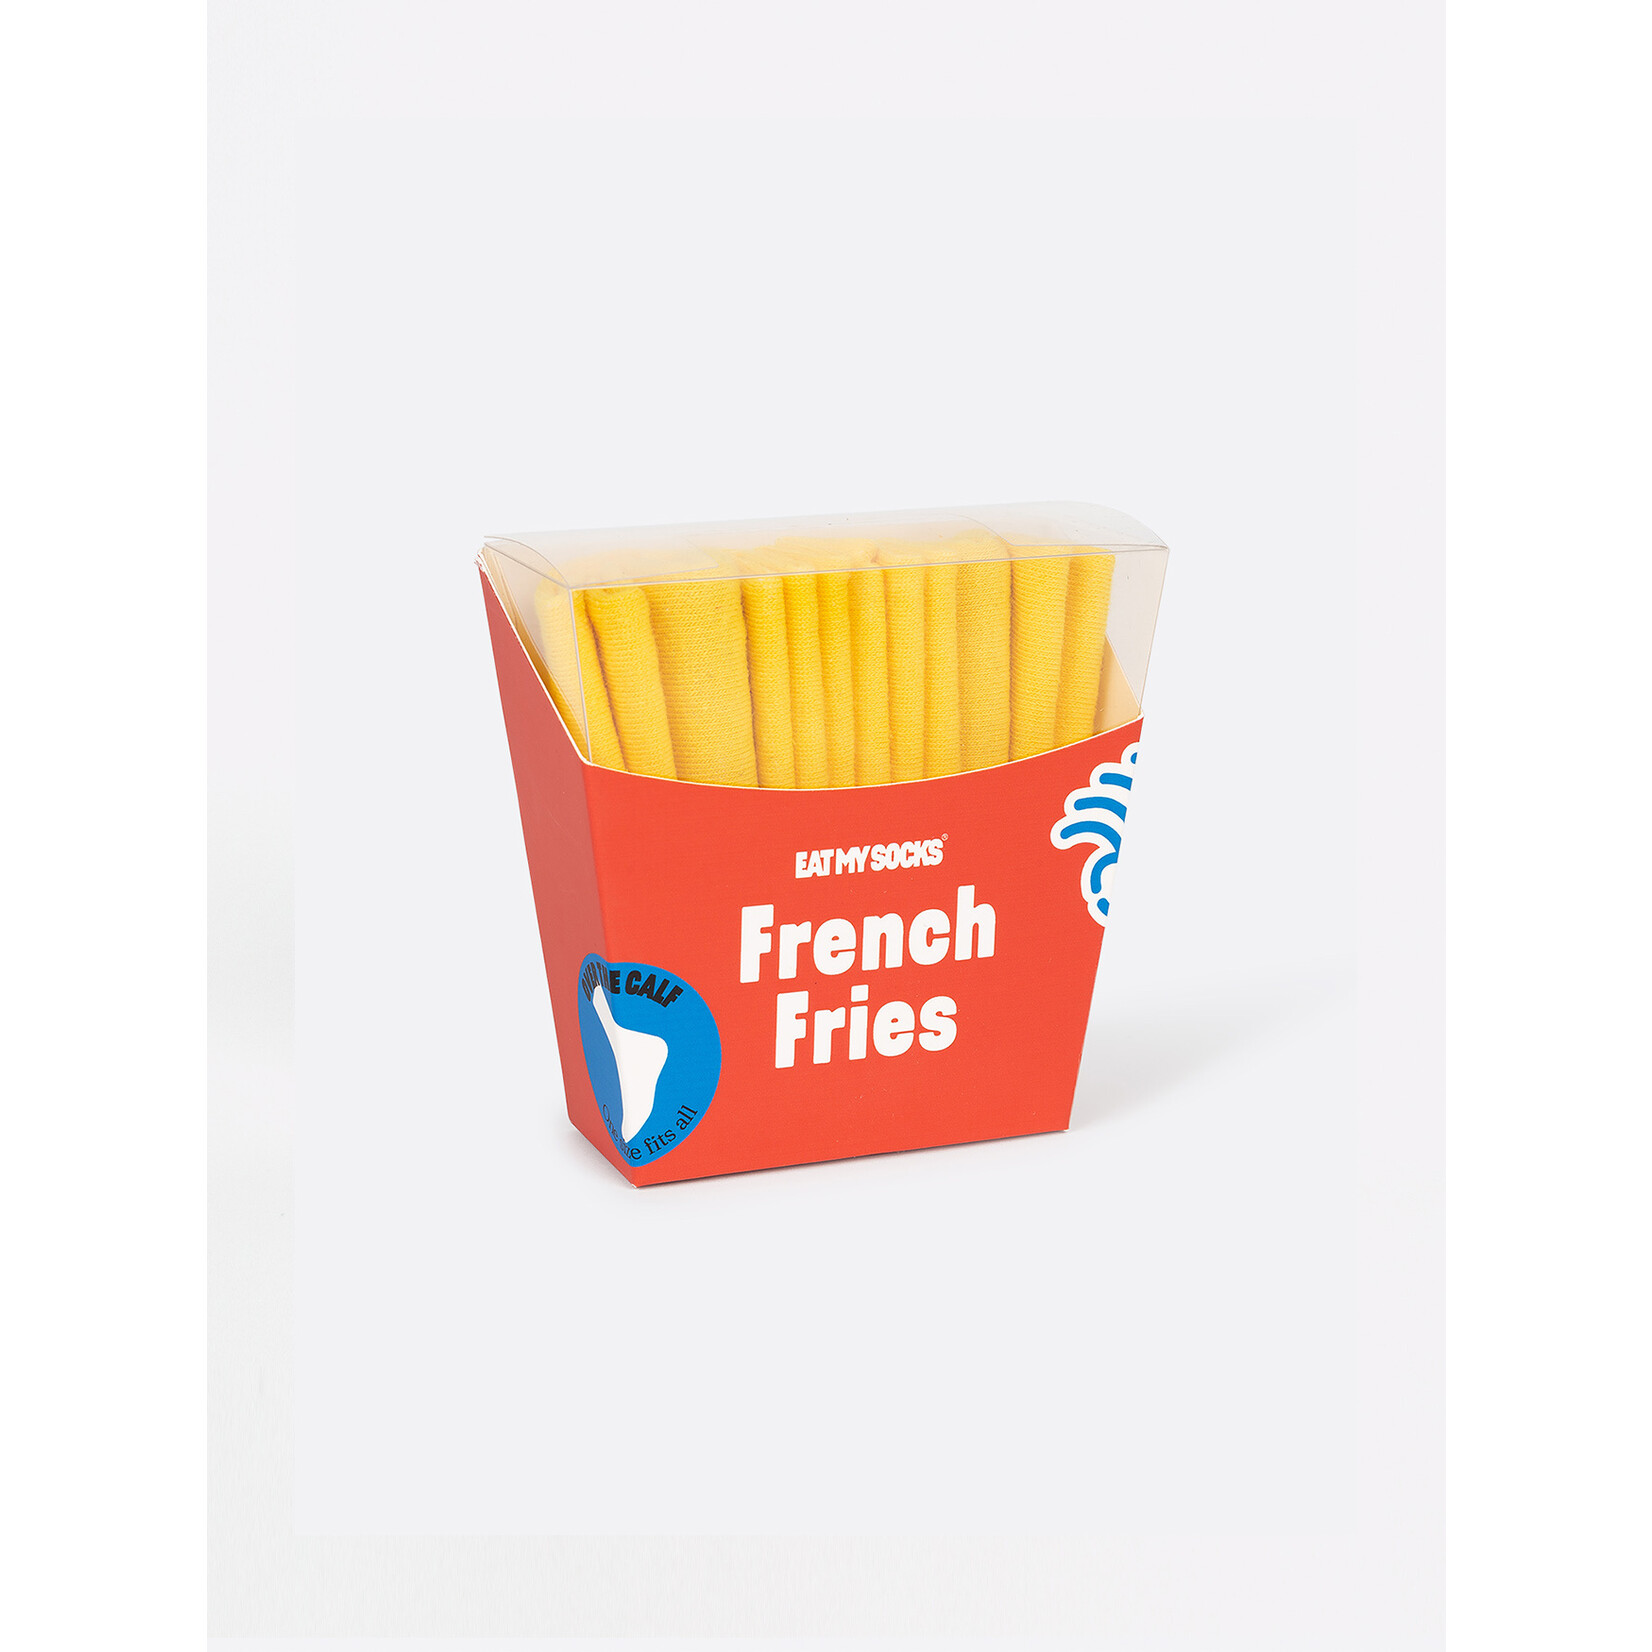 Doiy Socks, French Fries